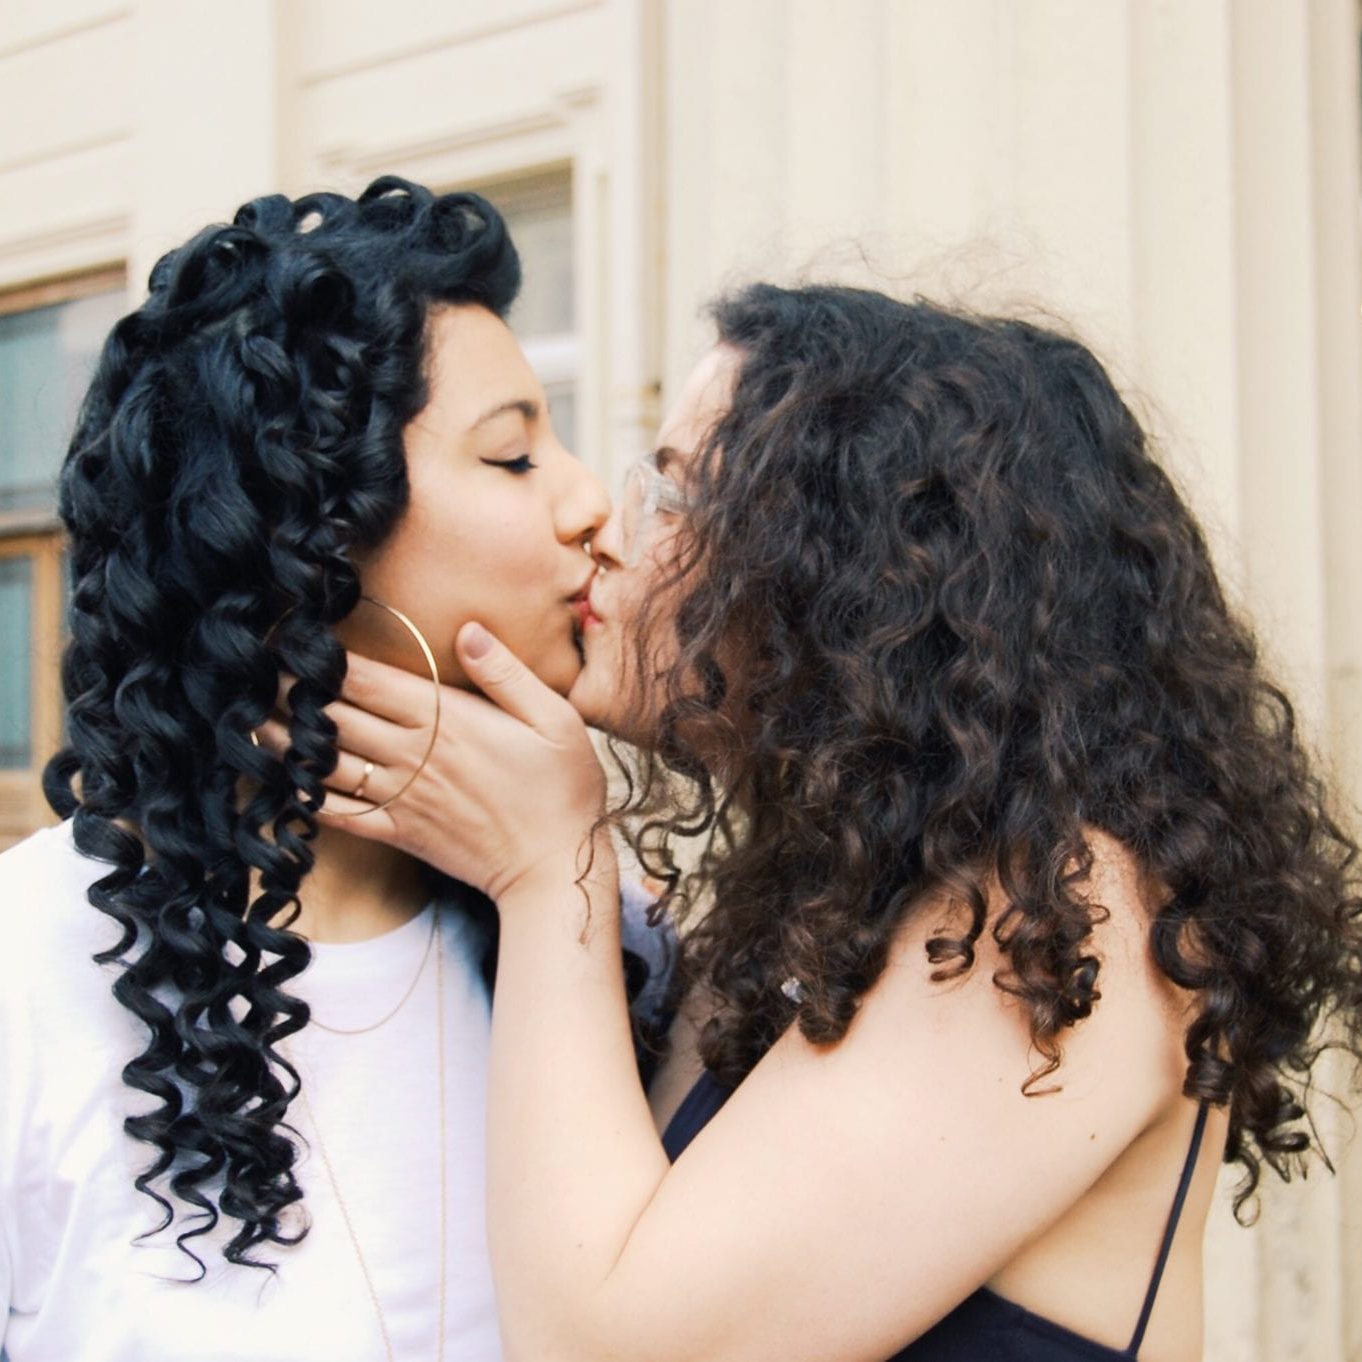 interracial lesbian couple - tallie-robinson-vs-fjU4sQos-unsplash